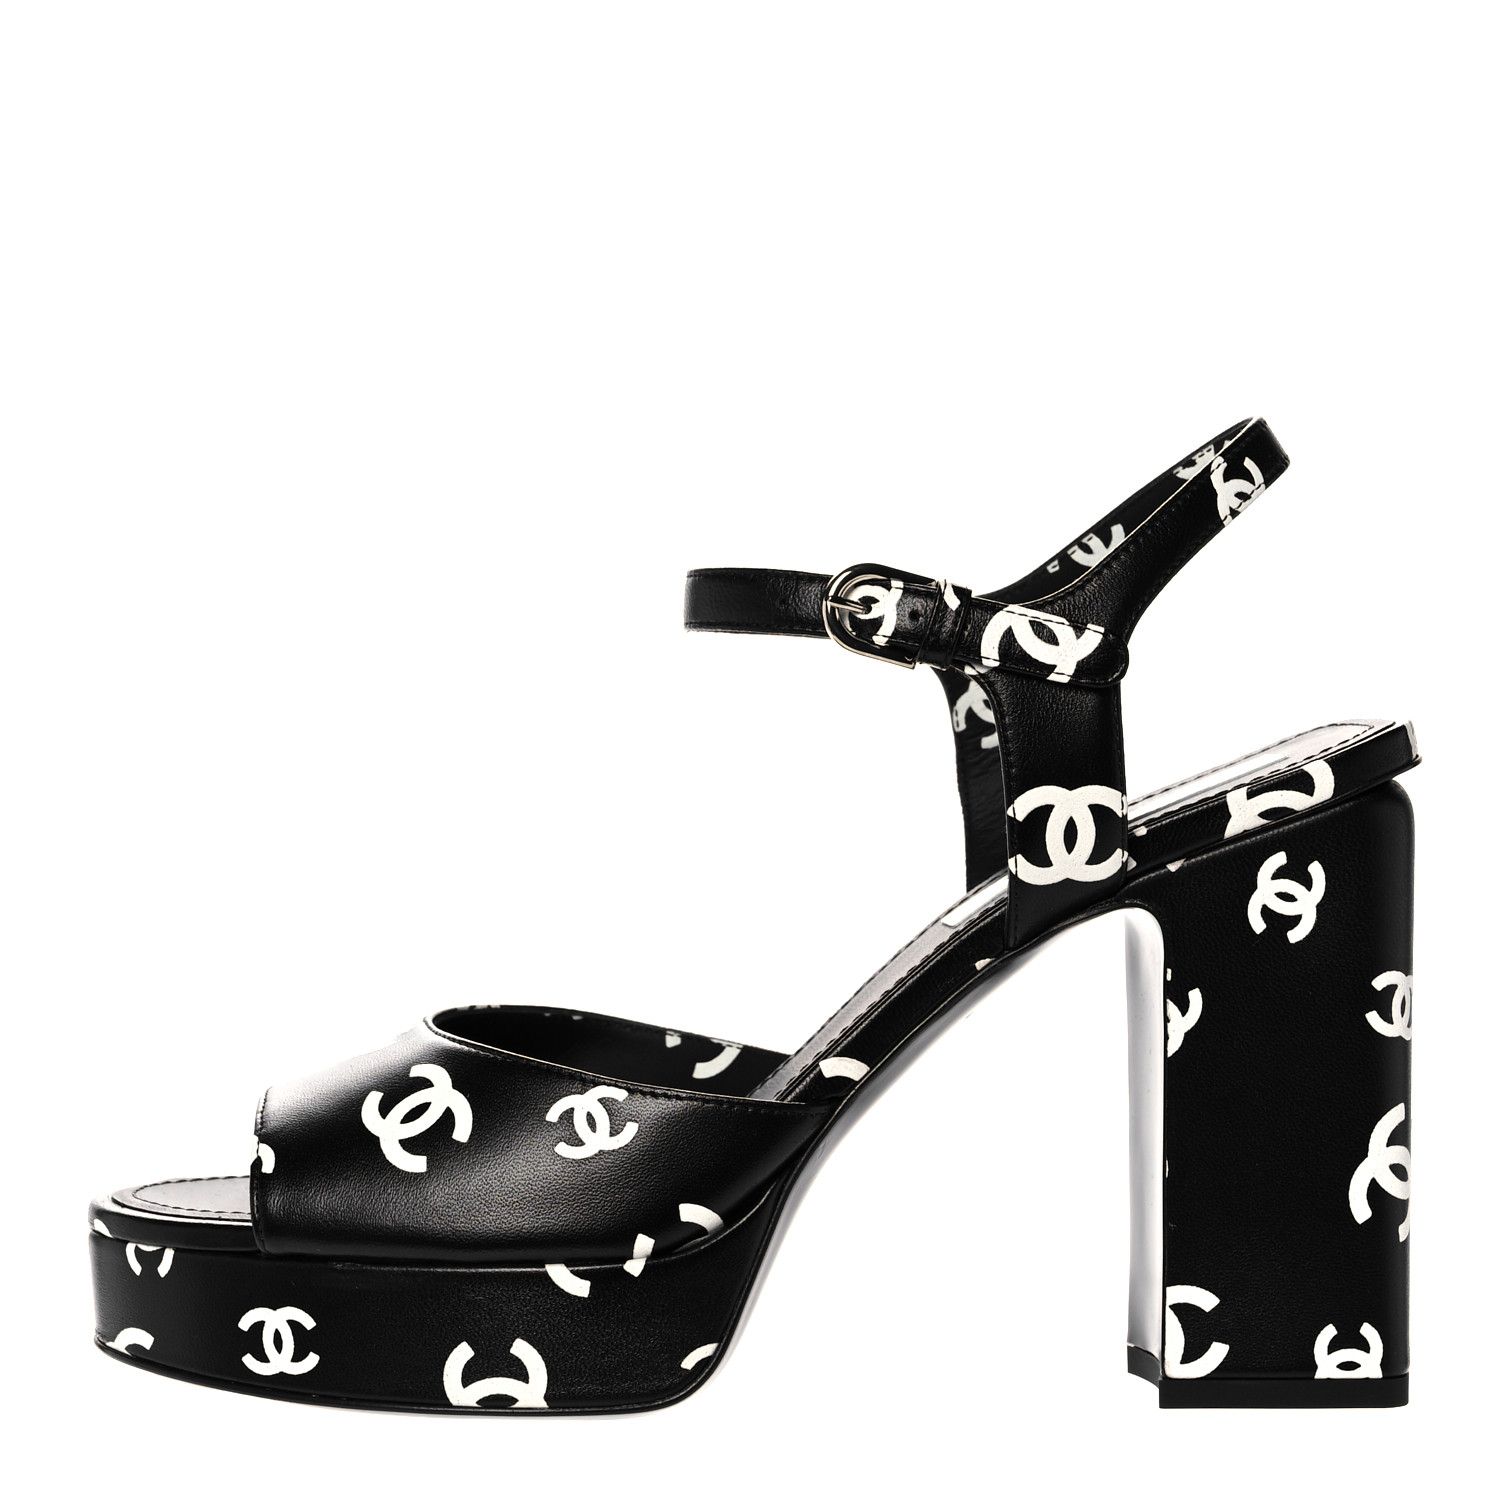 CHANEL Printed Lambskin CC Sandals 40 Black White | FASHIONPHILE | Fashionphile